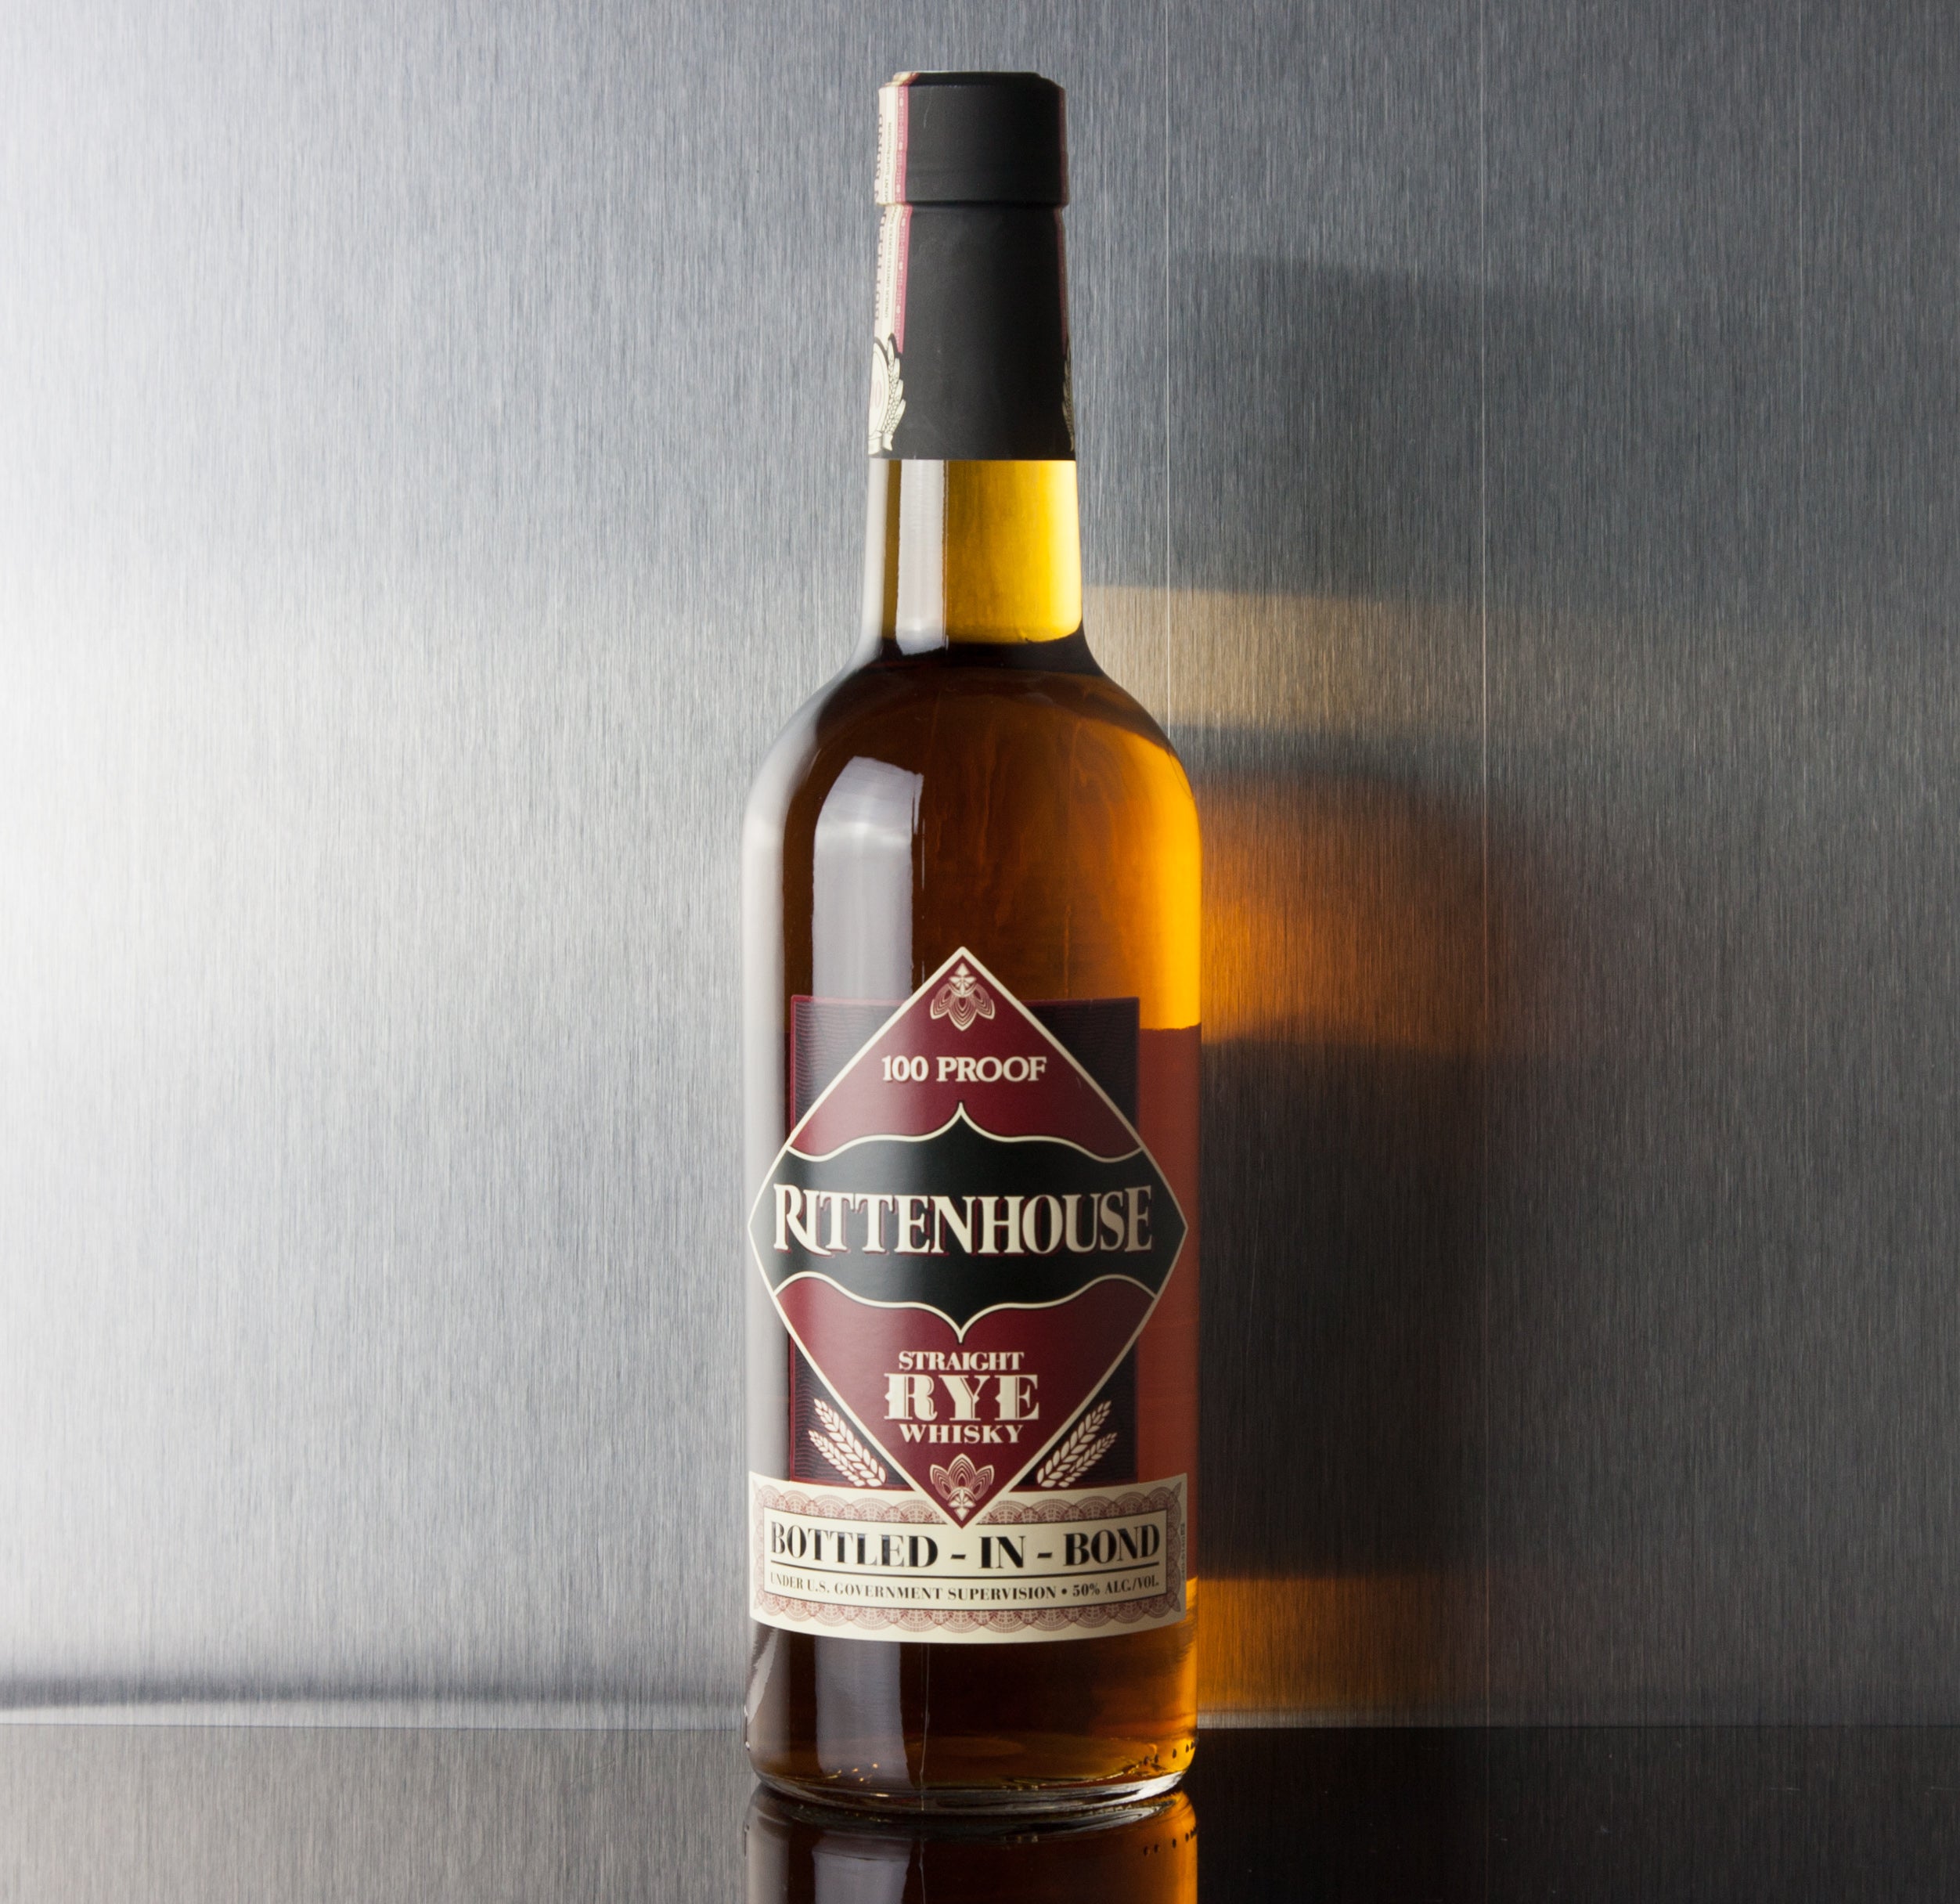 Rittenhouse 100 Proof Rye Whiskey